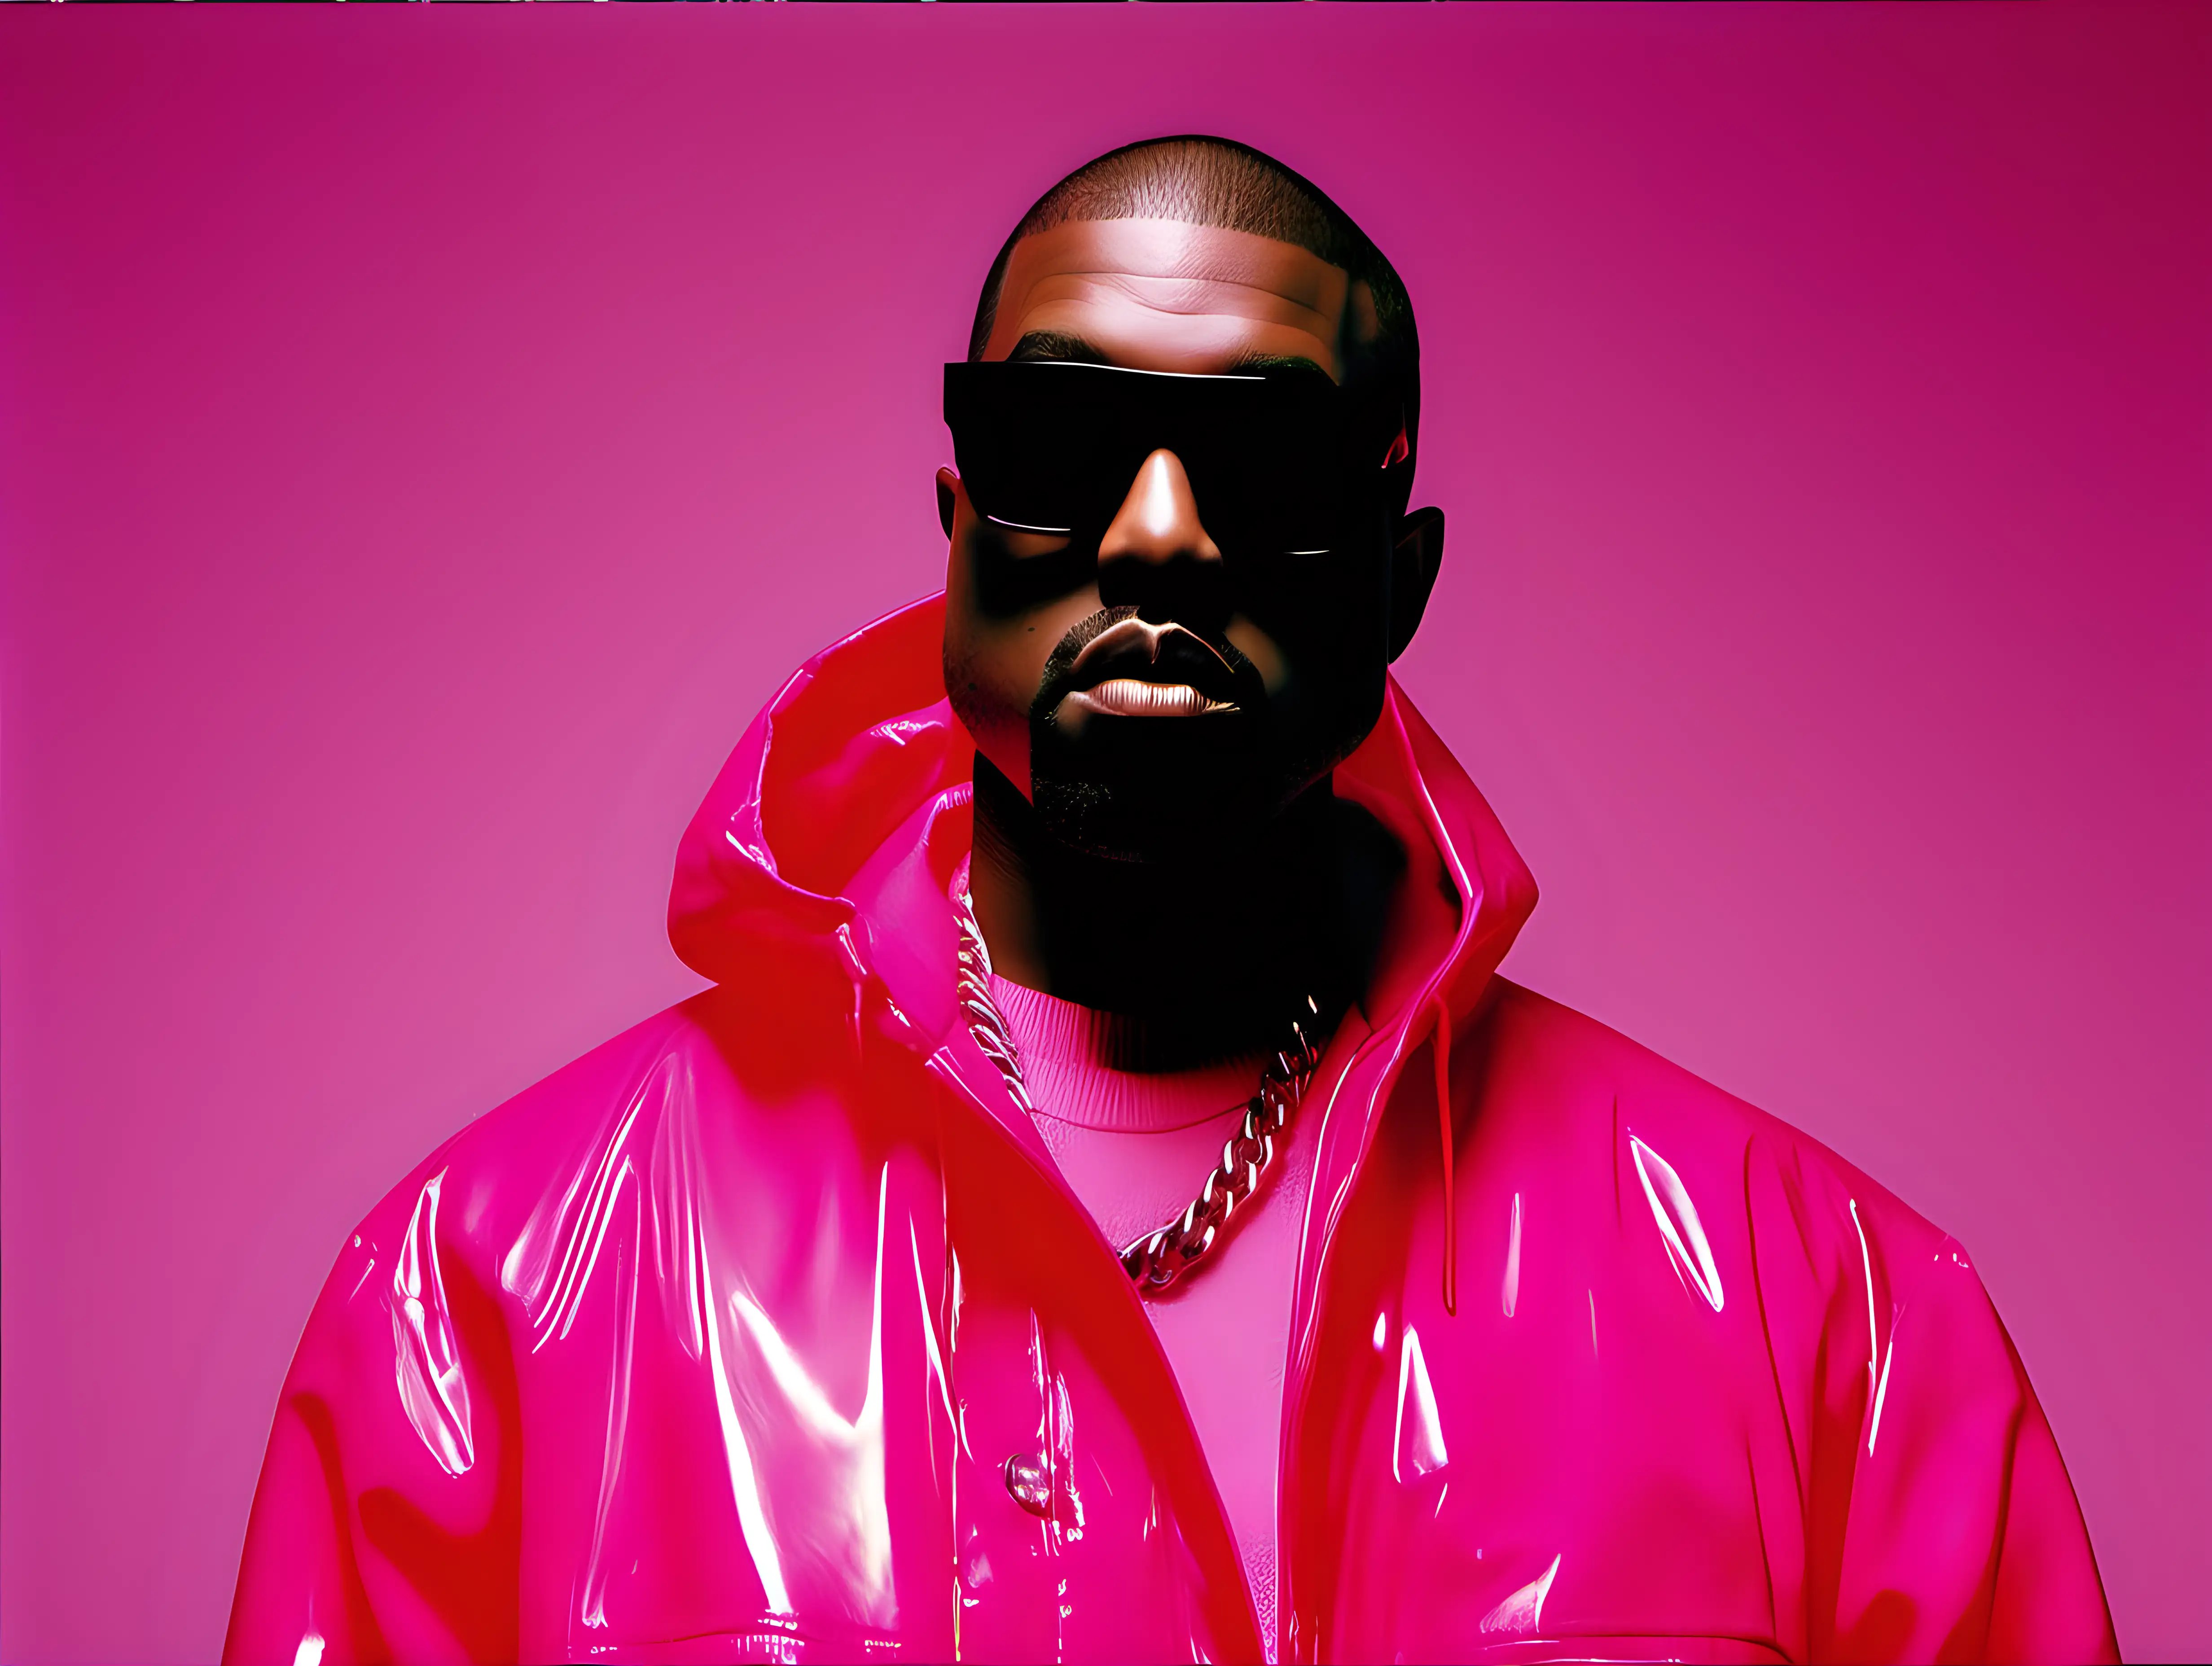 black and white film photo of Kanye west wearing neon pink jacket

